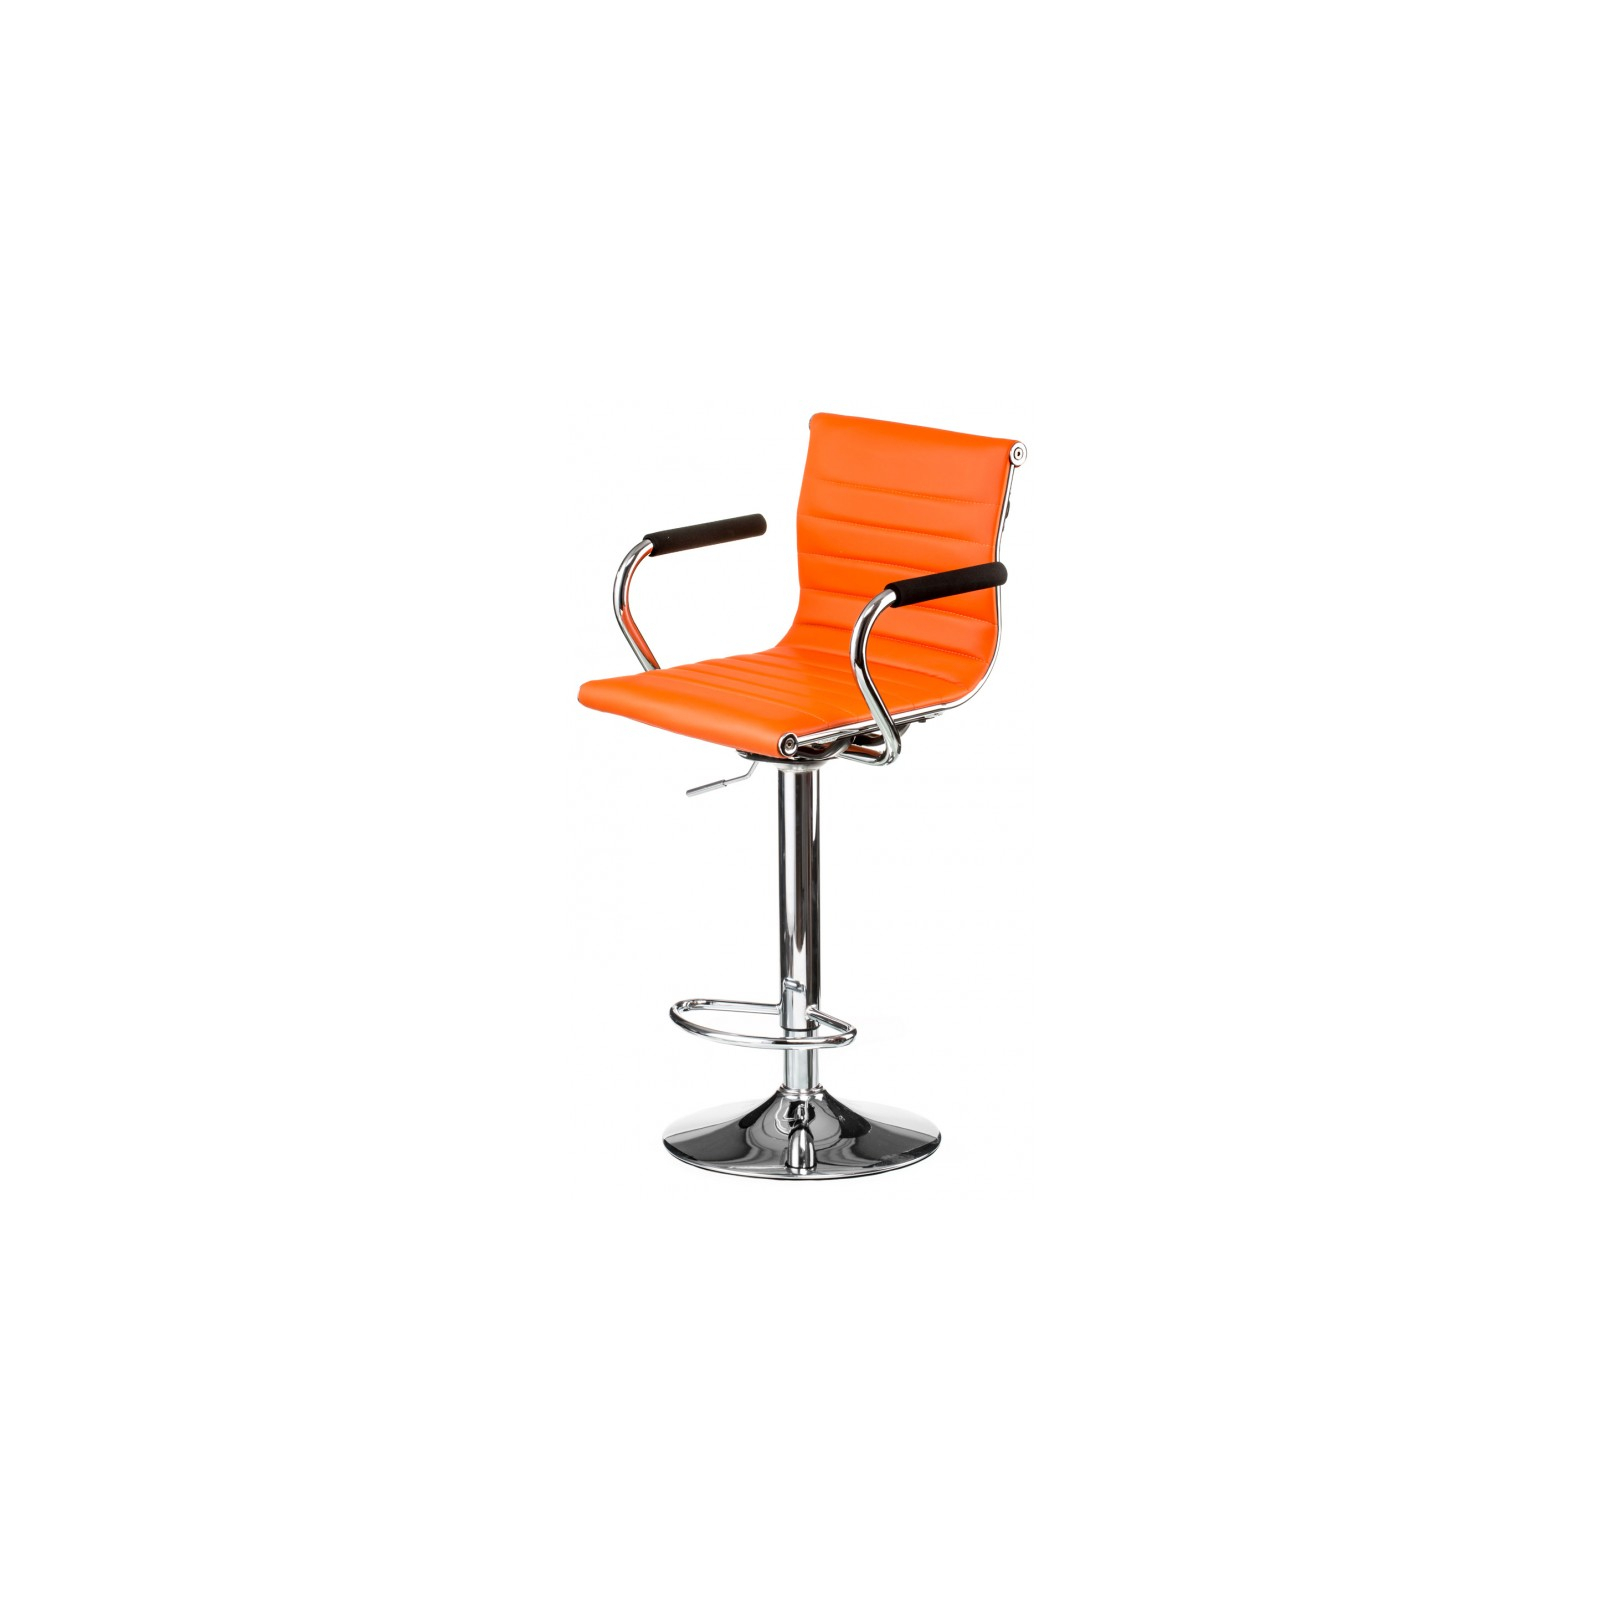 Барный стул Special4You барный Bar orange plate (000002158)